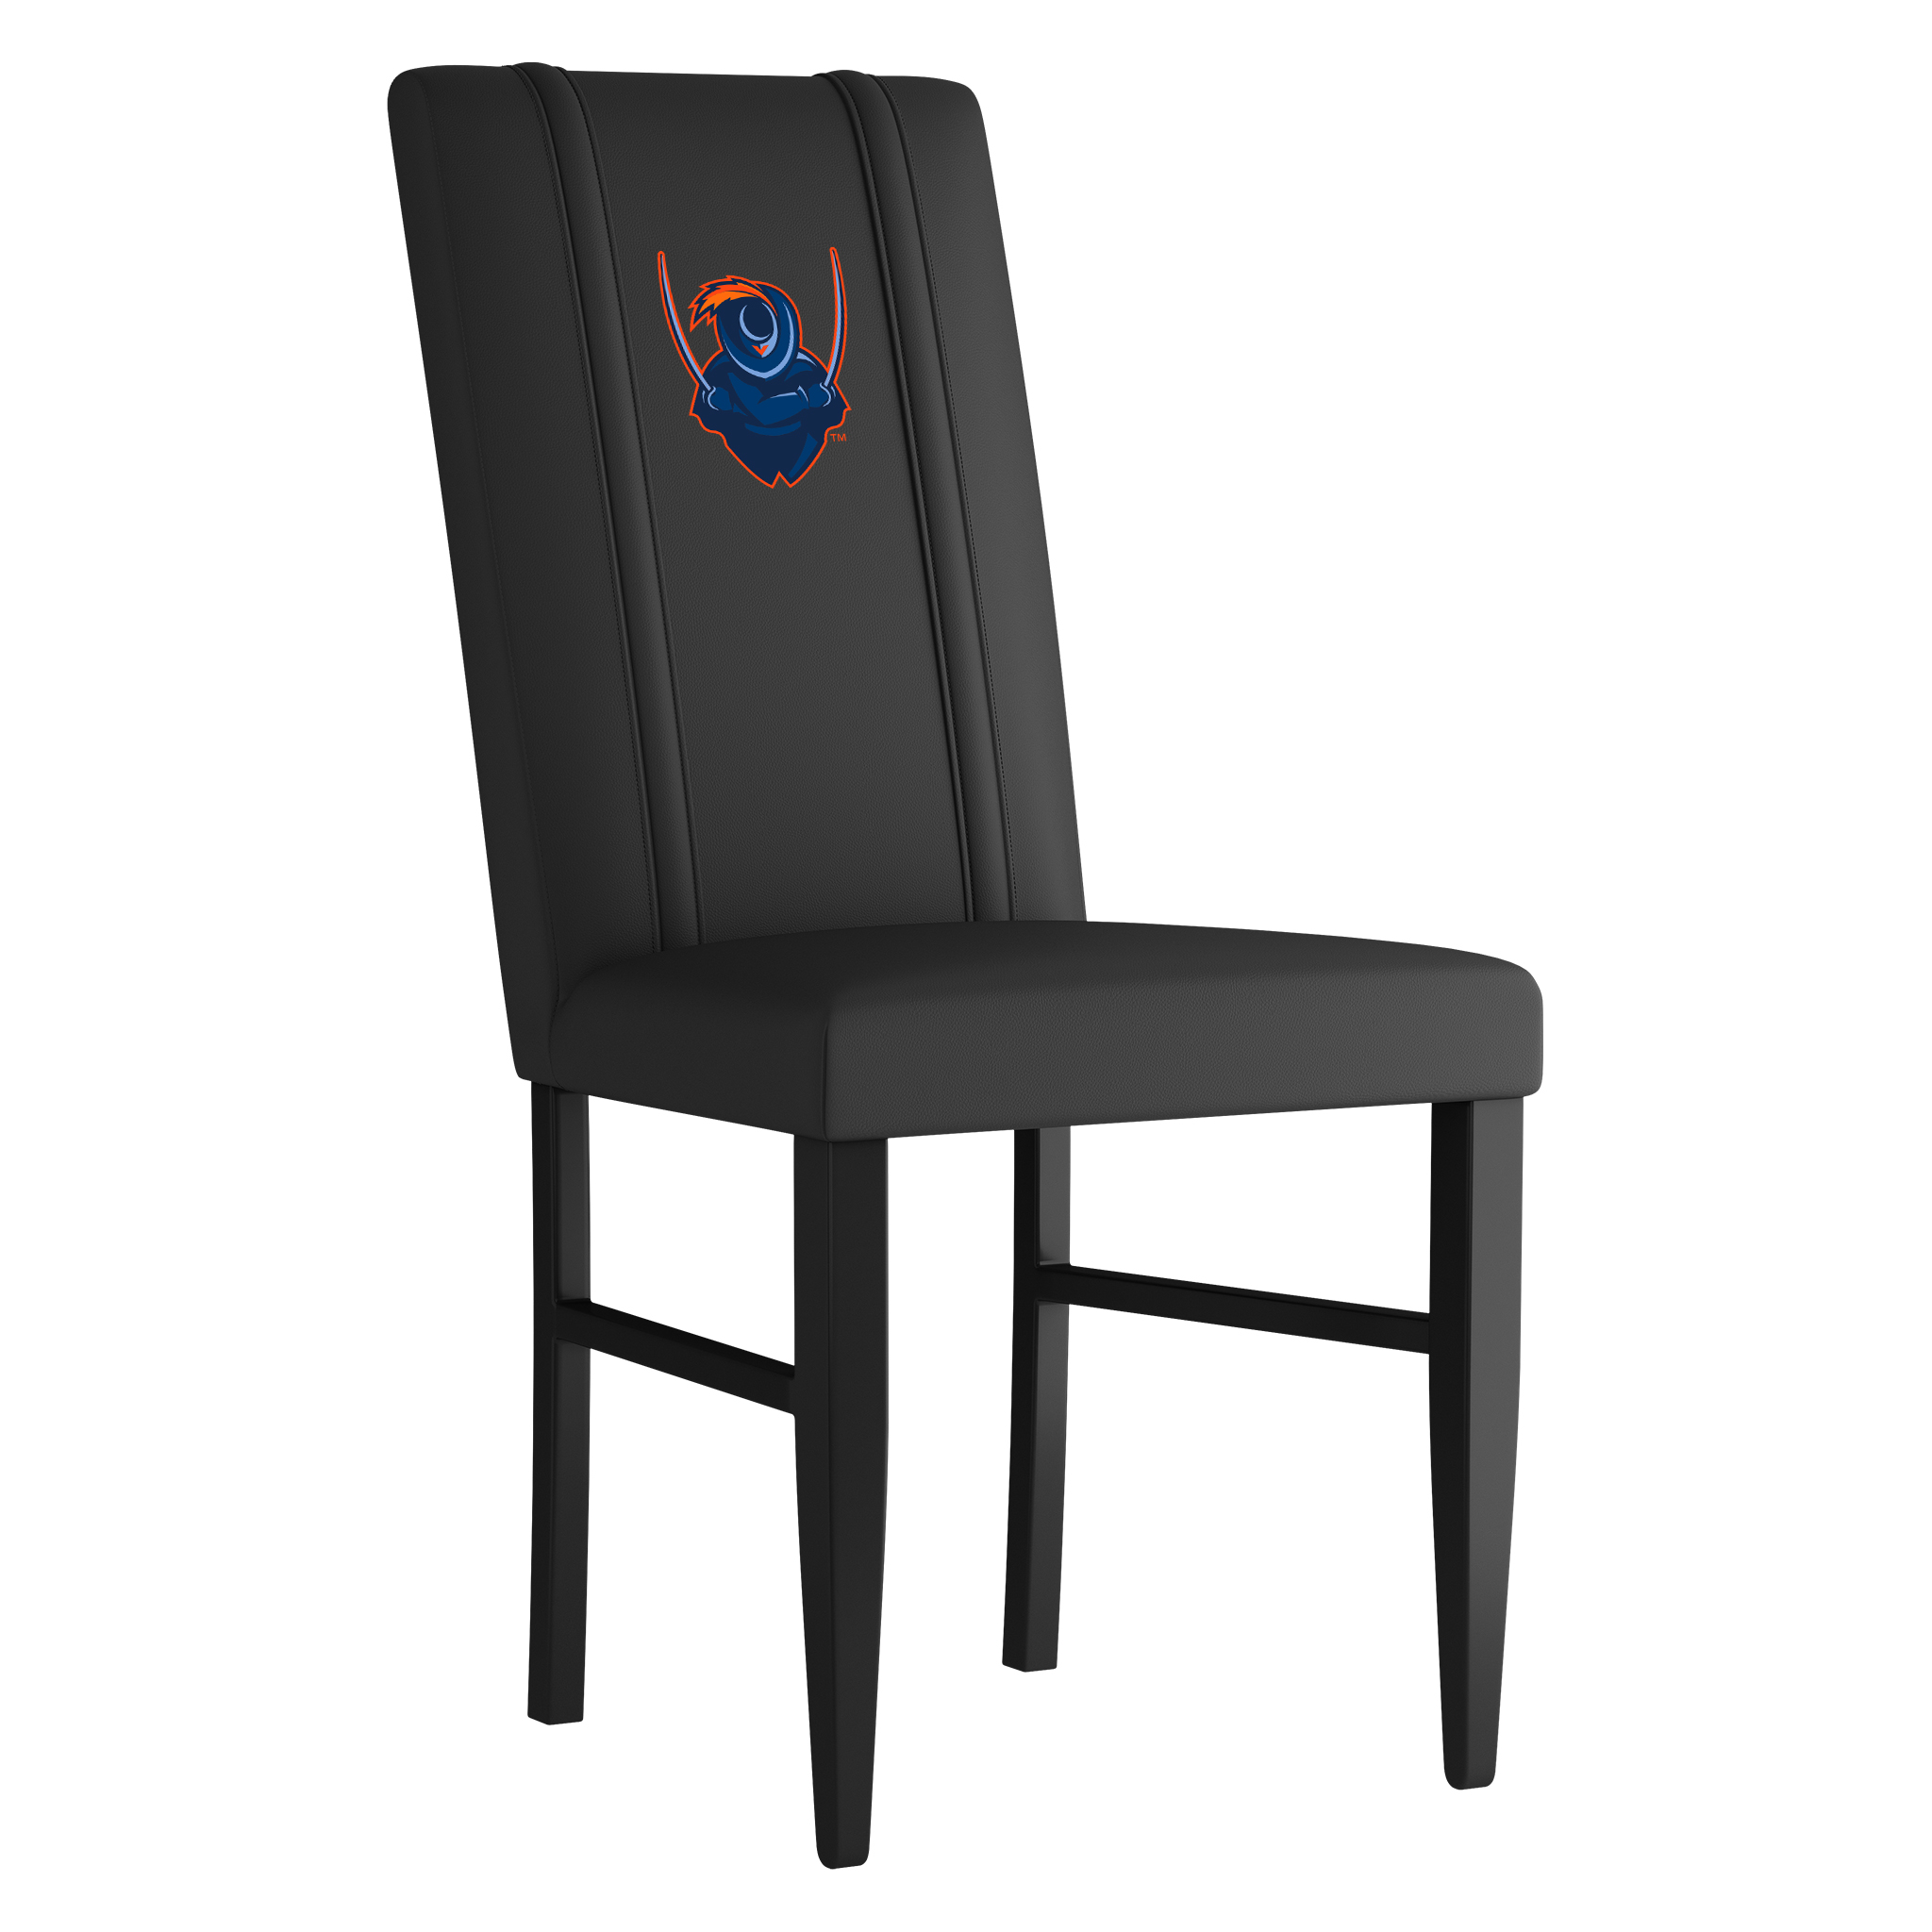 Virginia Cavaliers Side Chair 2000 With Virginia Cavaliers Alternate Logo